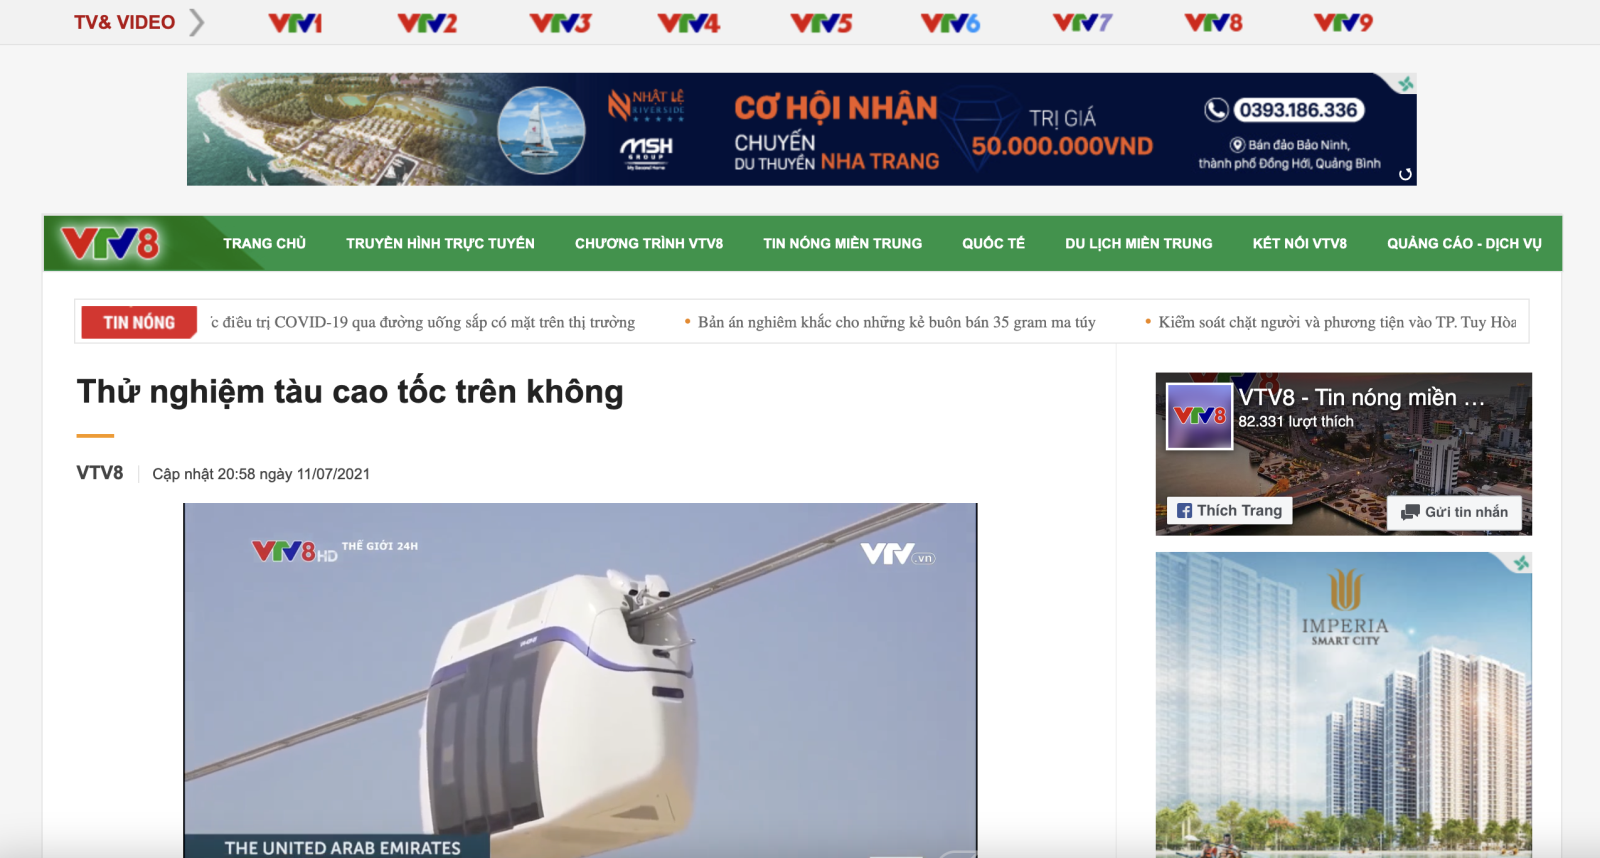 VTV 8 đưa tin về skyway